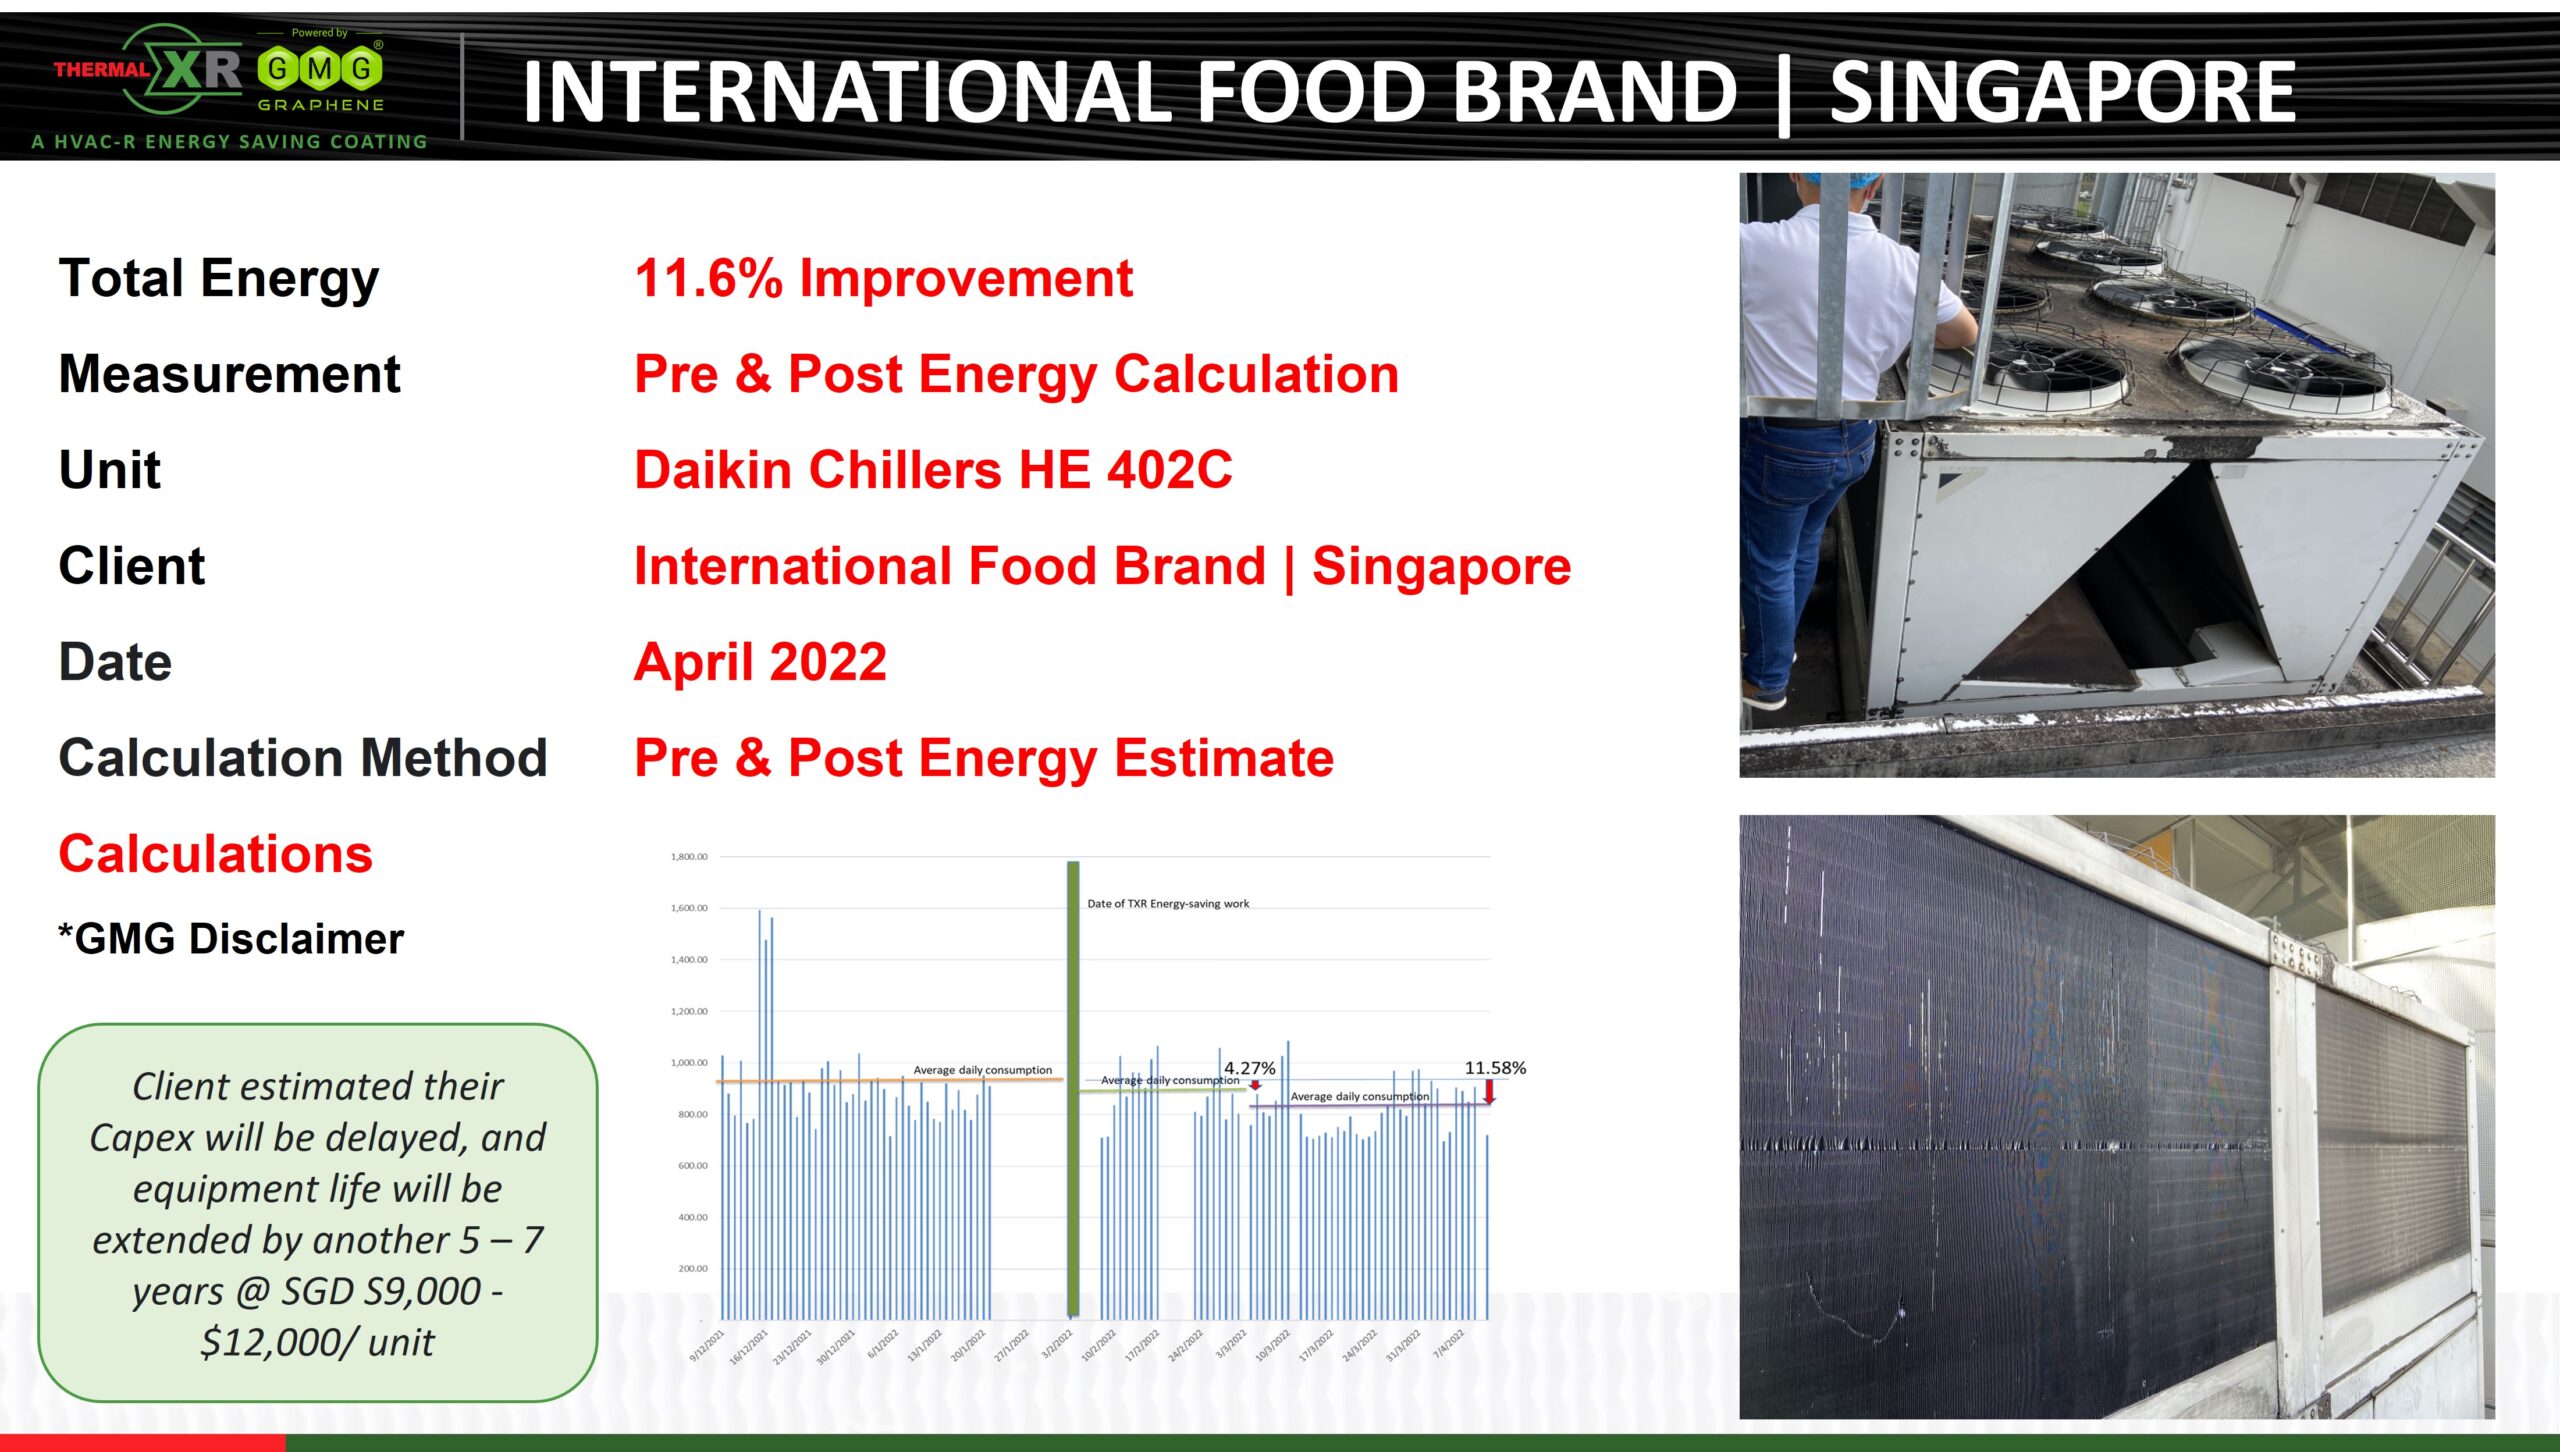 THERMAL-XR®项目更新：新加坡国际食品品牌生产基地，大金冷水机组HE 402C，利用THERMAL-XR®节能11.6%